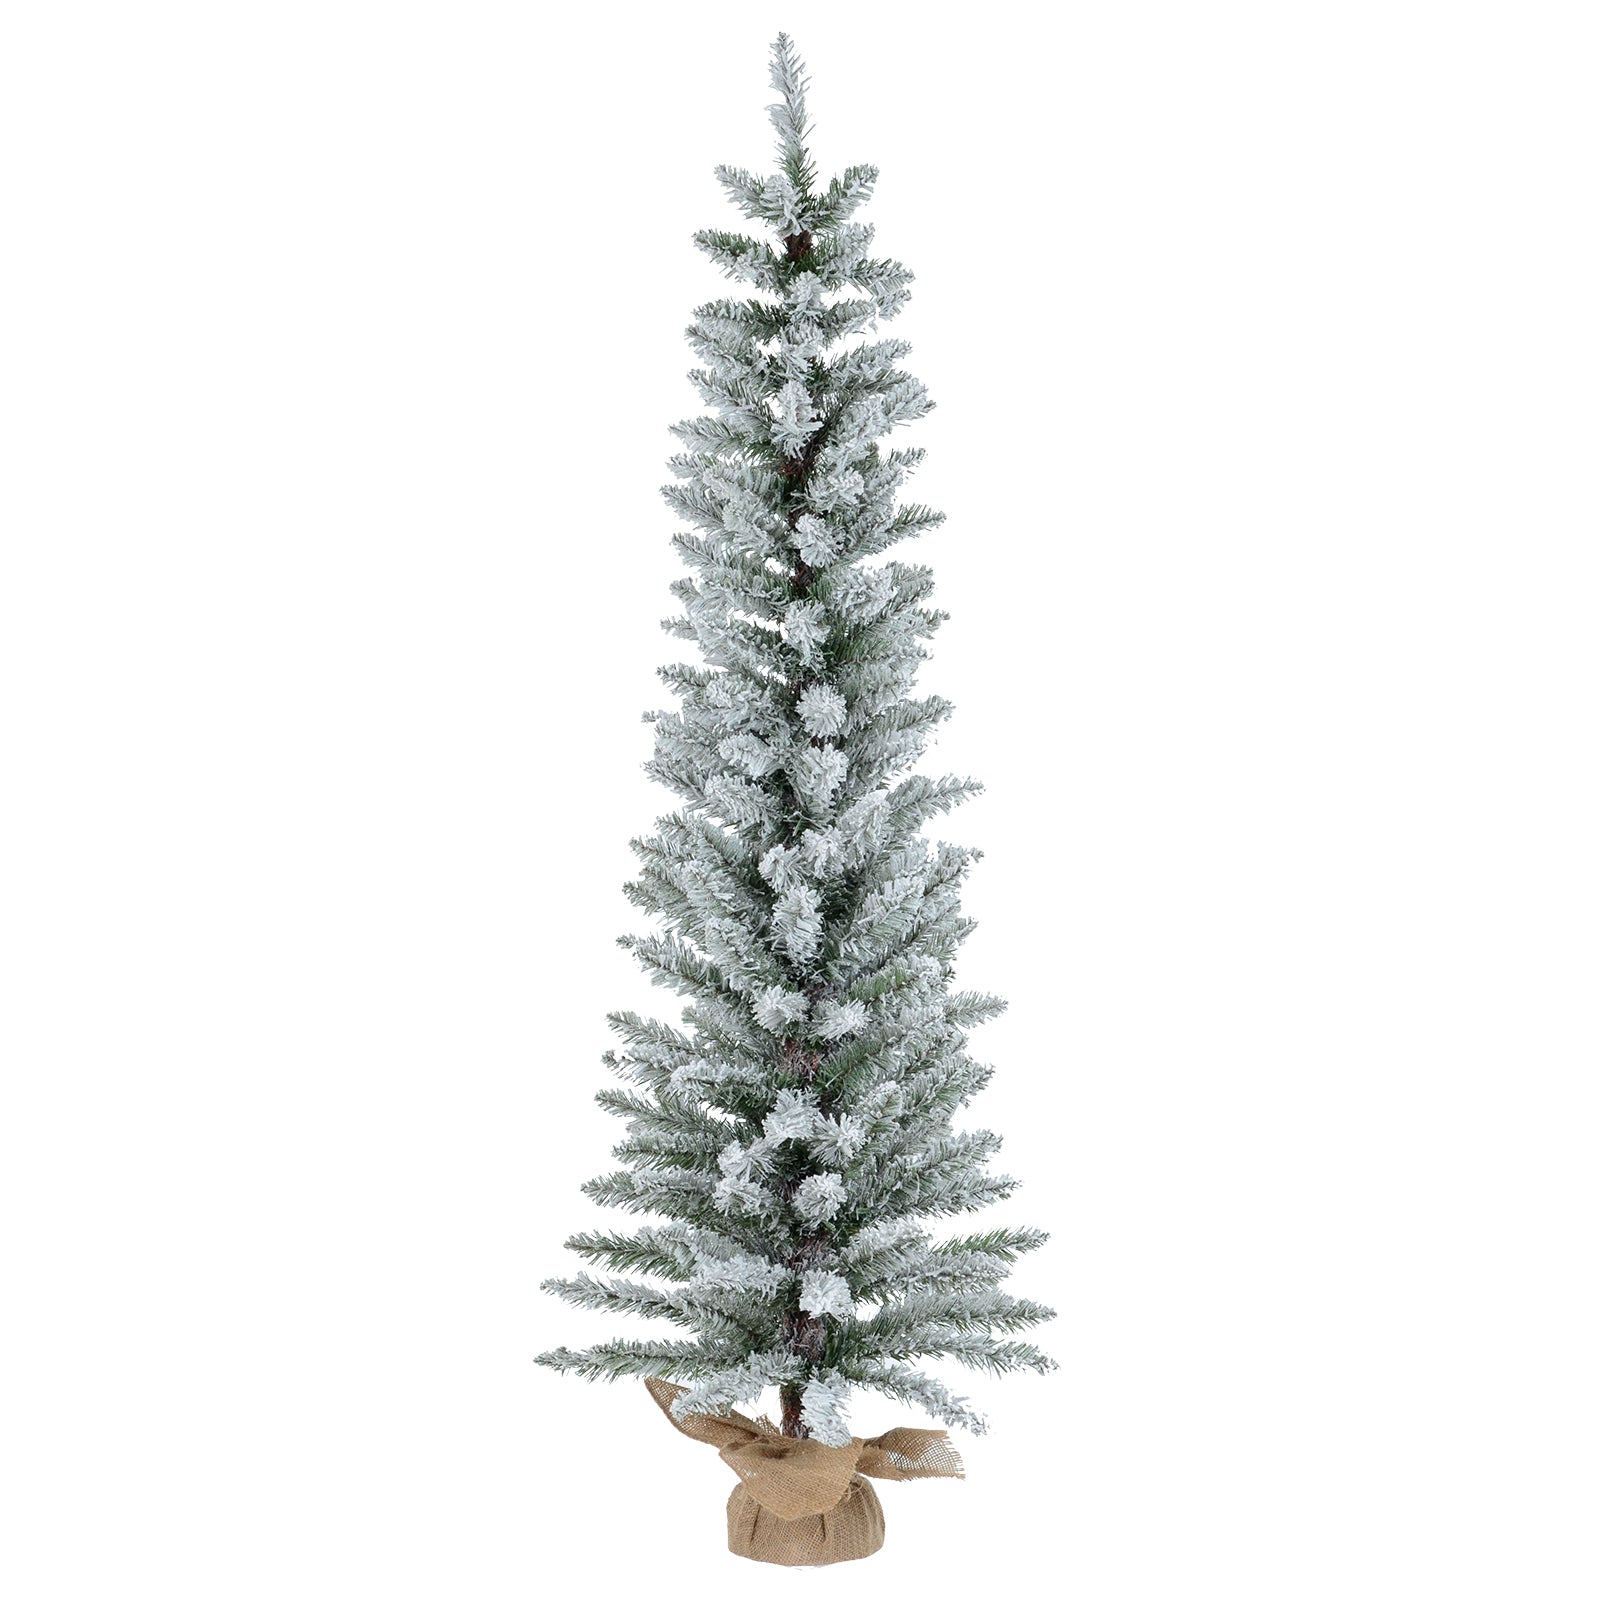 Mr Crimbo 3ft 4ft 5ft Flocked Pencil Christmas Tree Jute Base - MrCrimbo.co.uk -XS6438 - 5ft -3ft tree